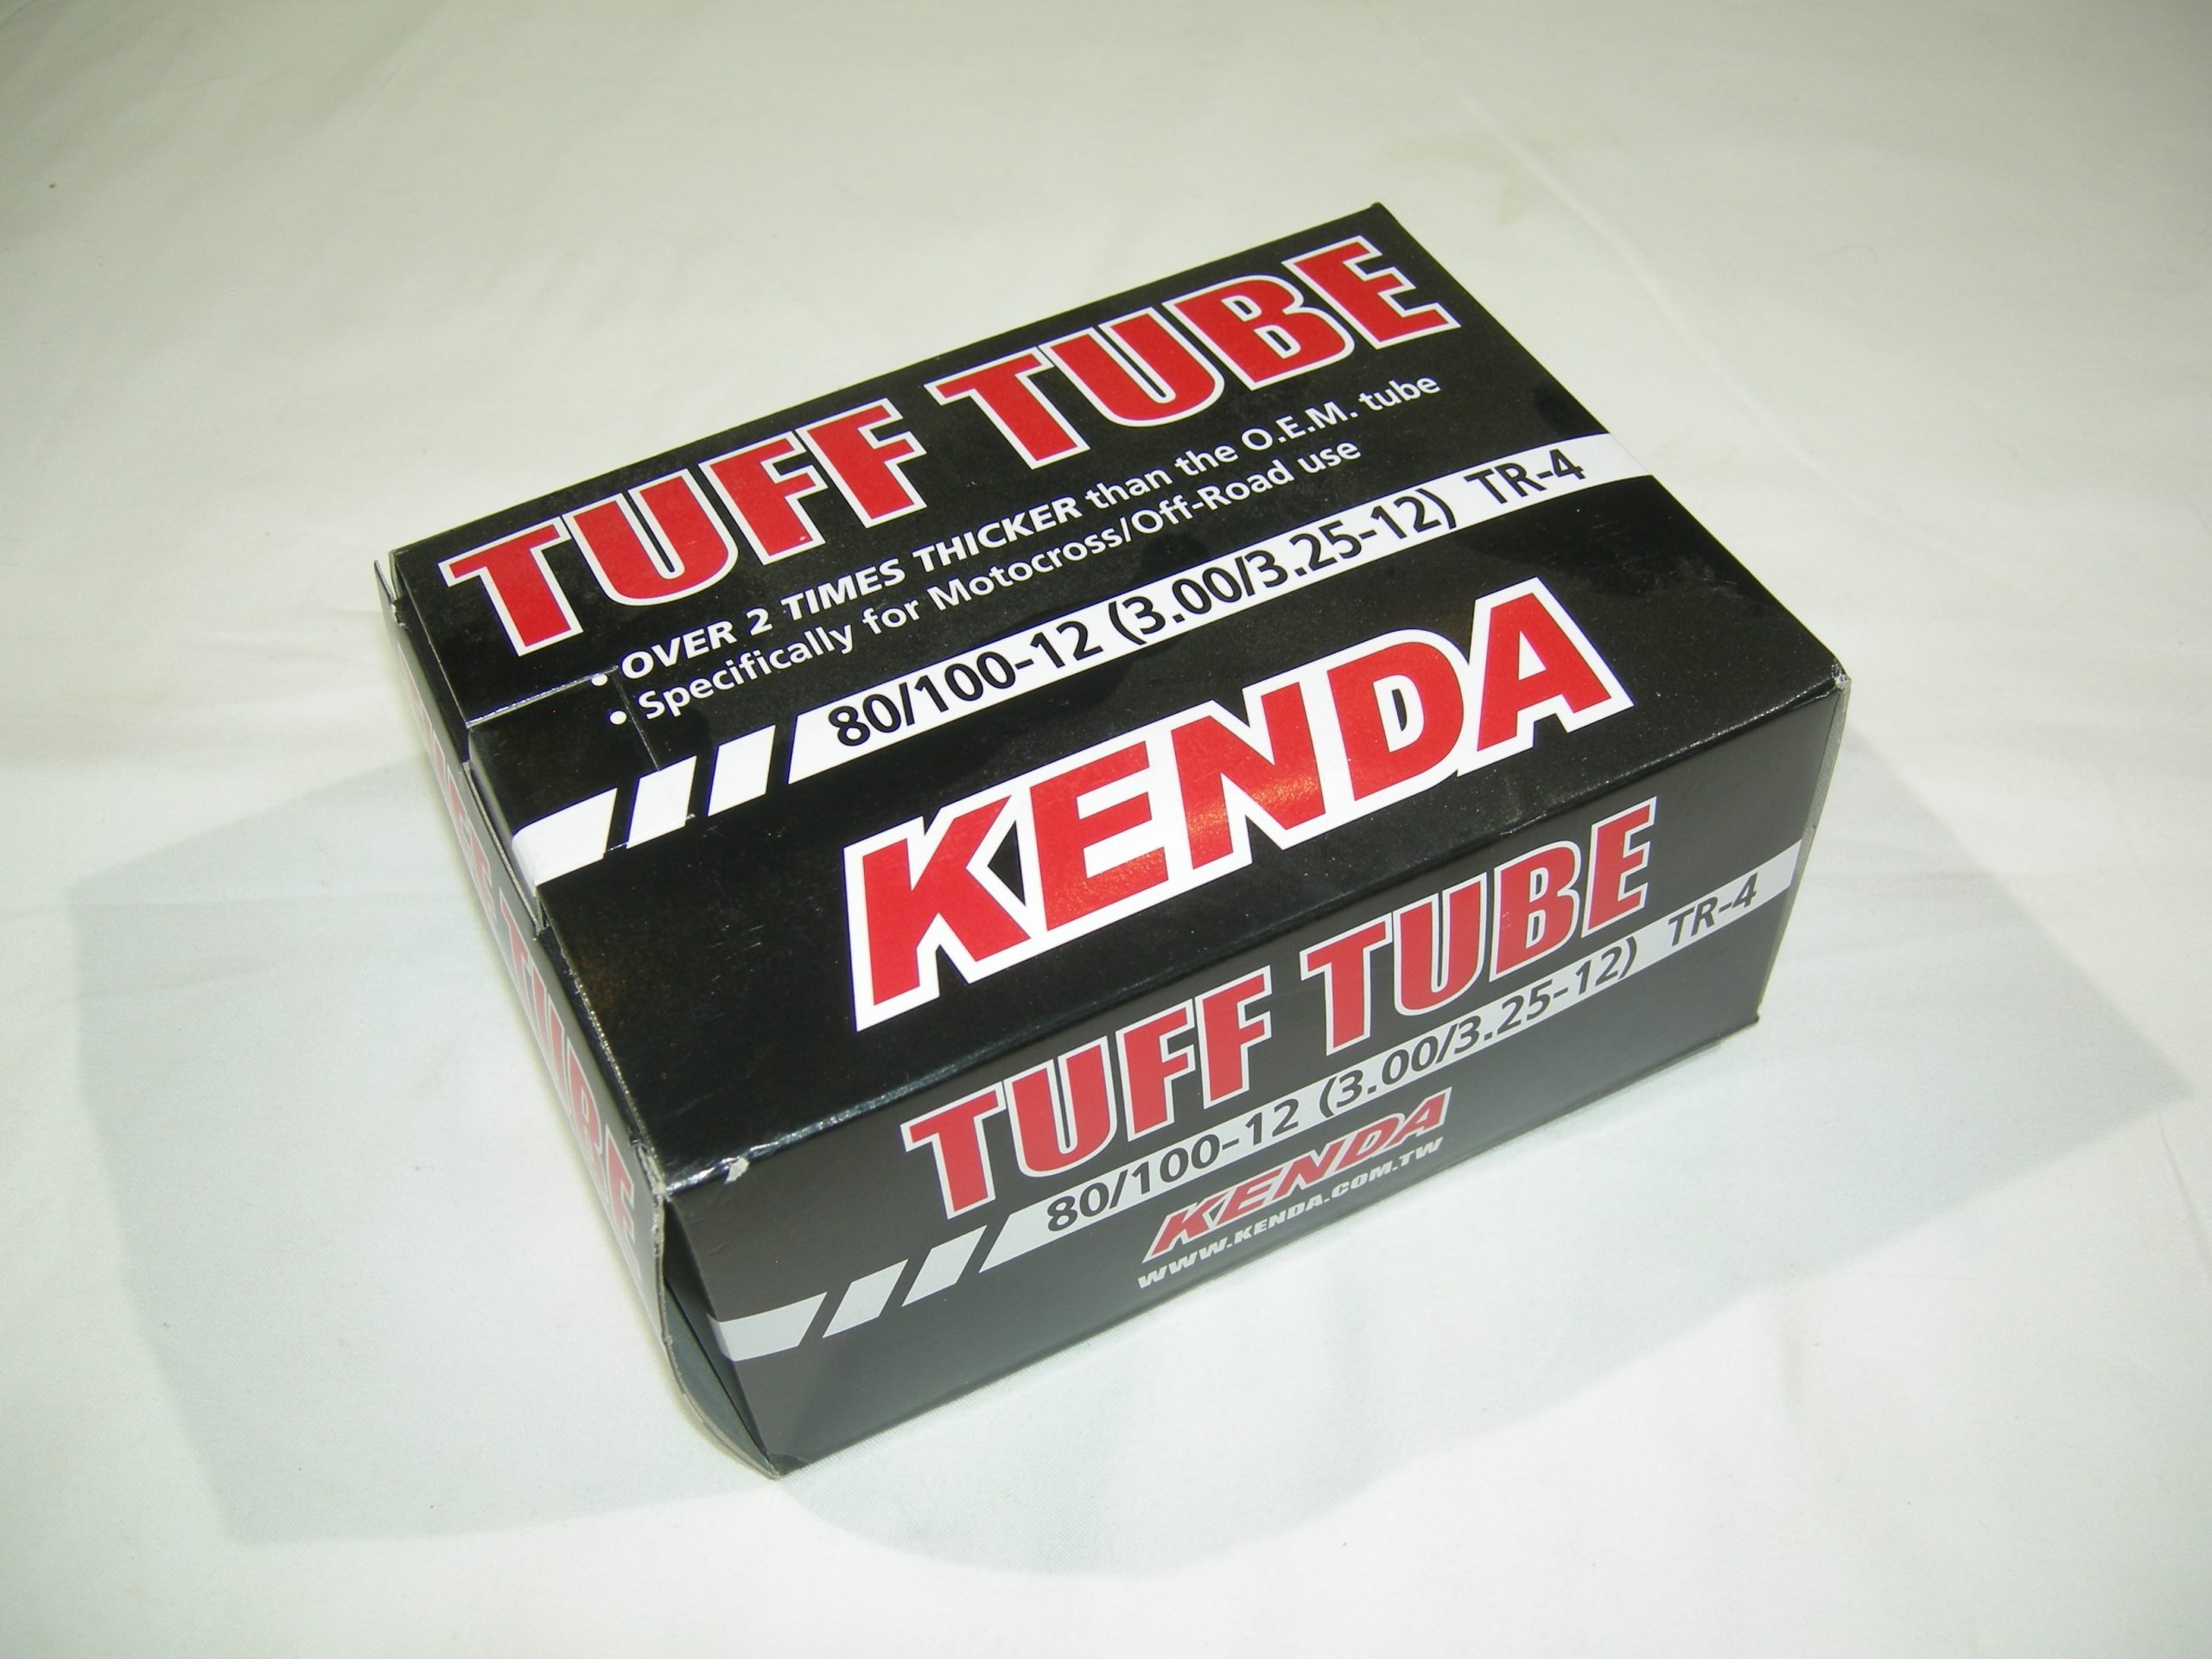 PW80 Tube Rear Kenda Tuff 80/100-12 rear-0